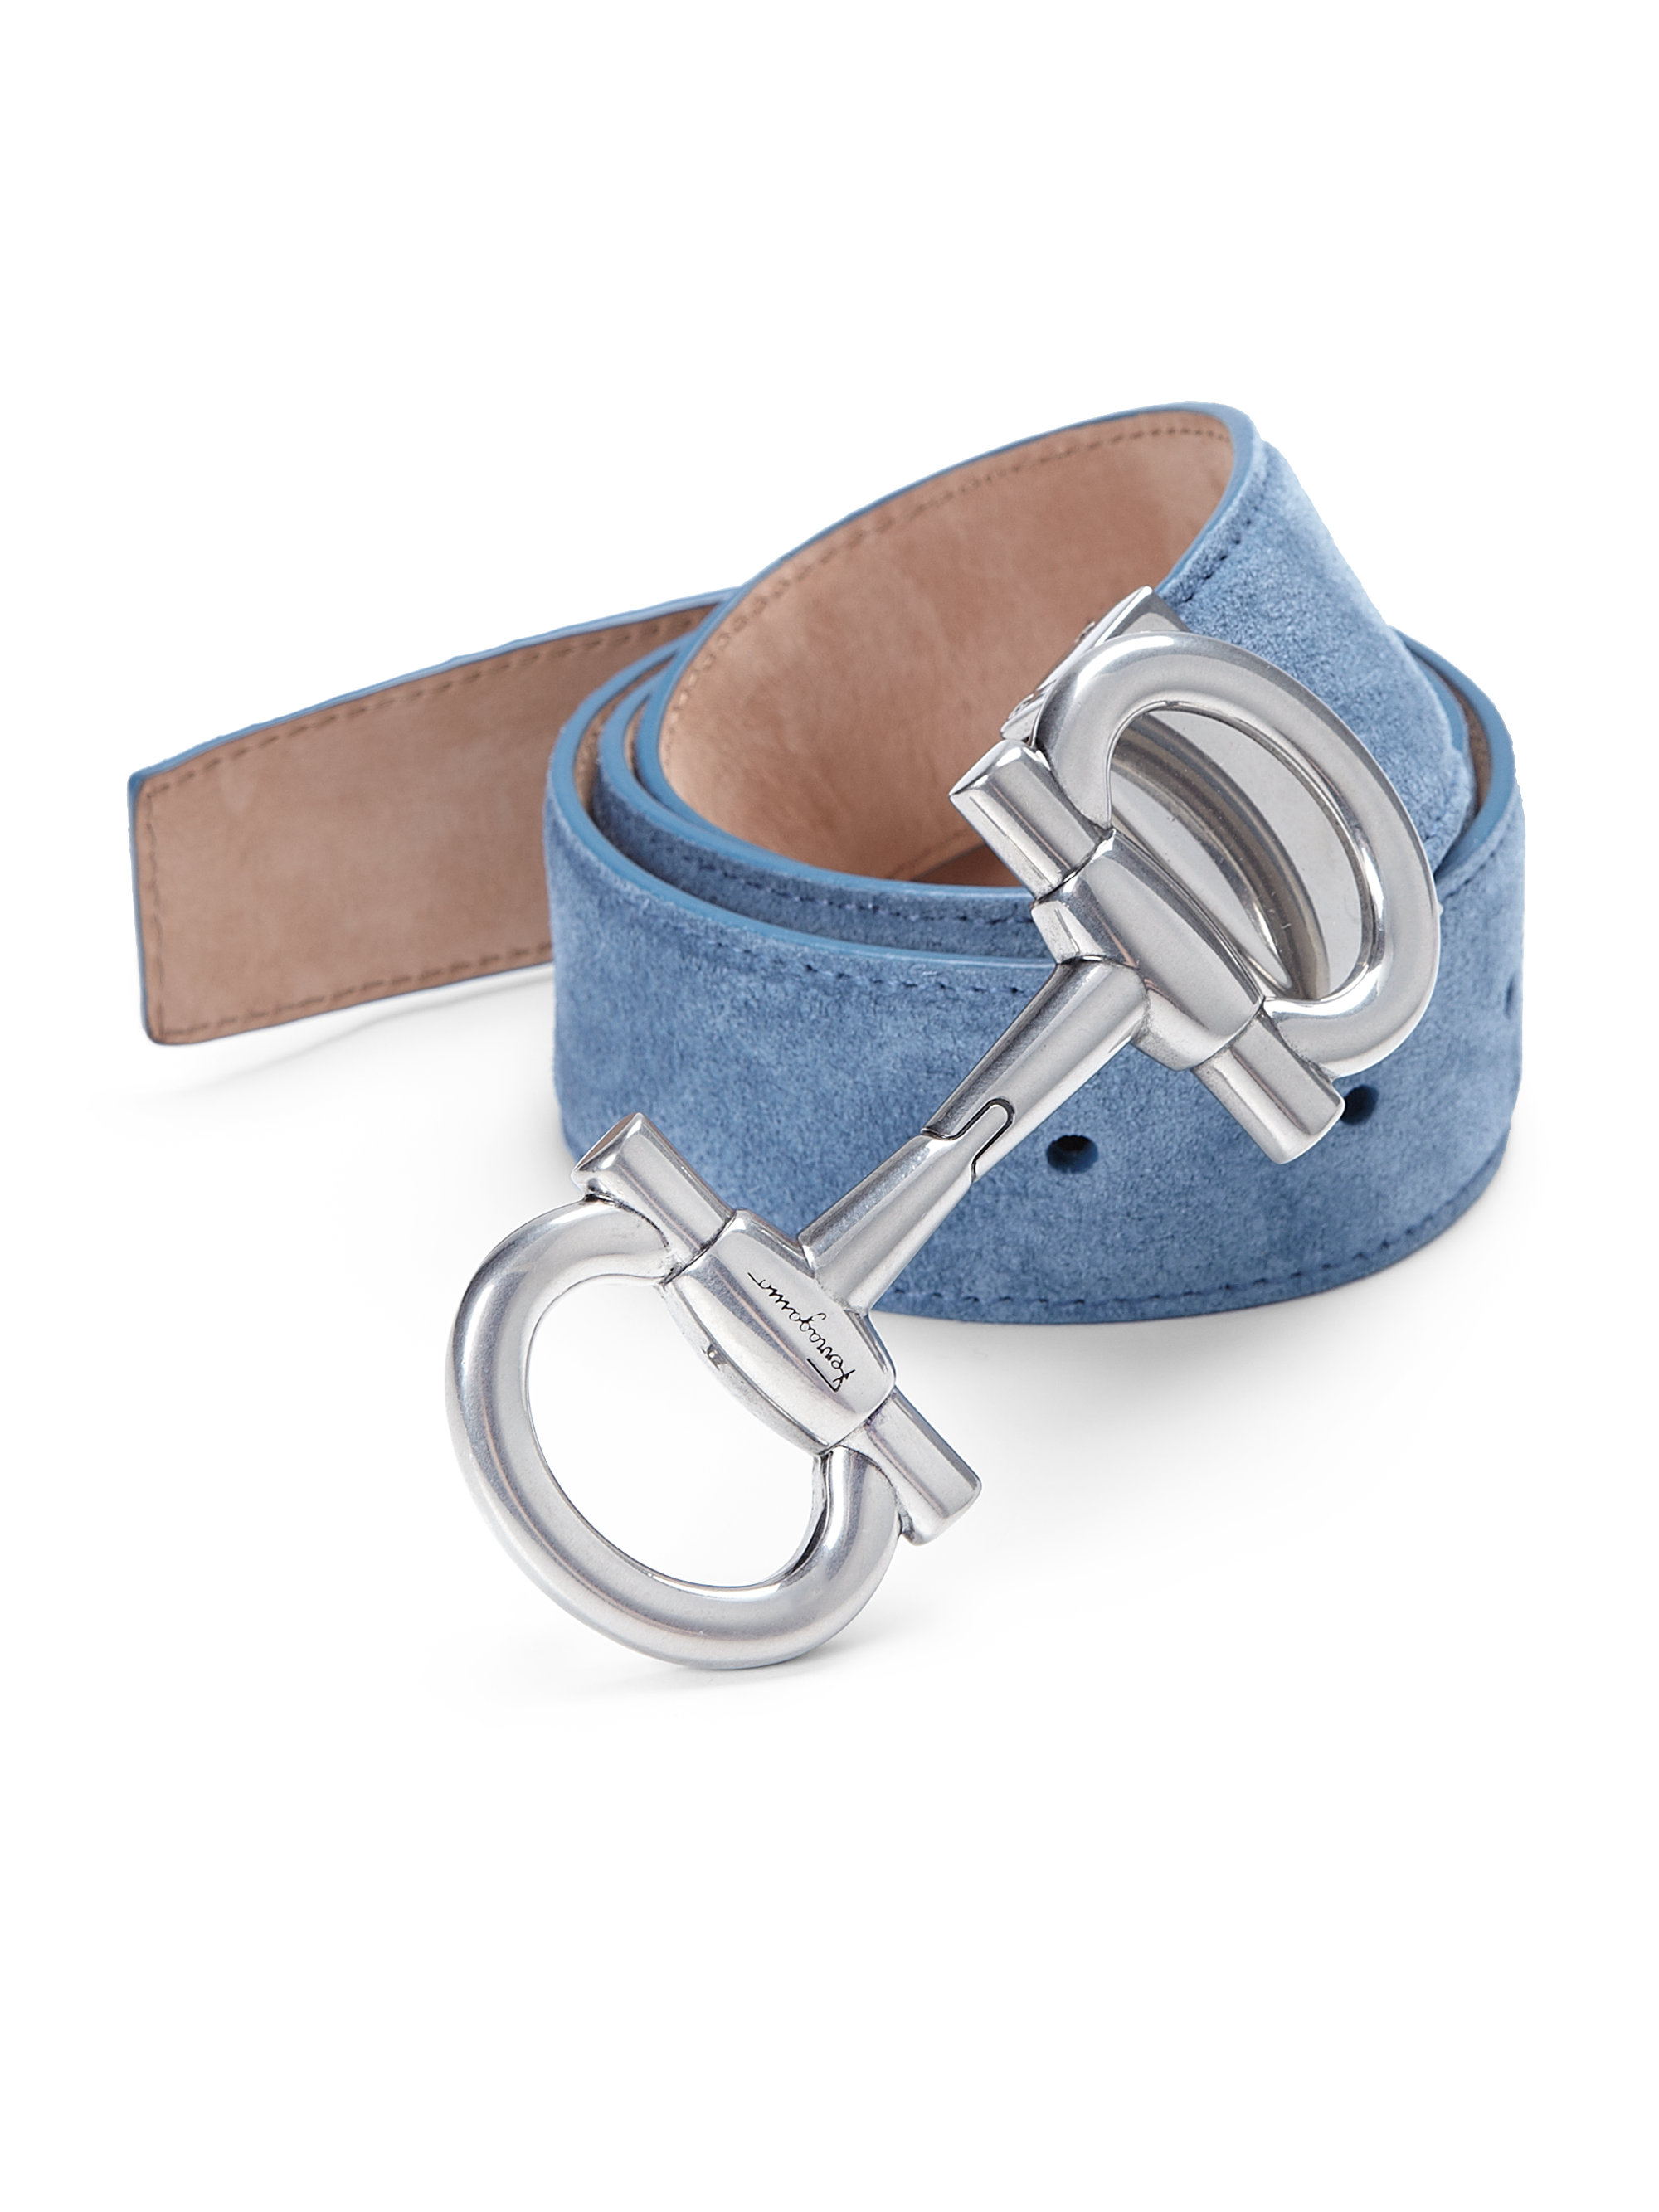 Salvatore Ferragamo Men's Double Gancini Buckle Leather Belt